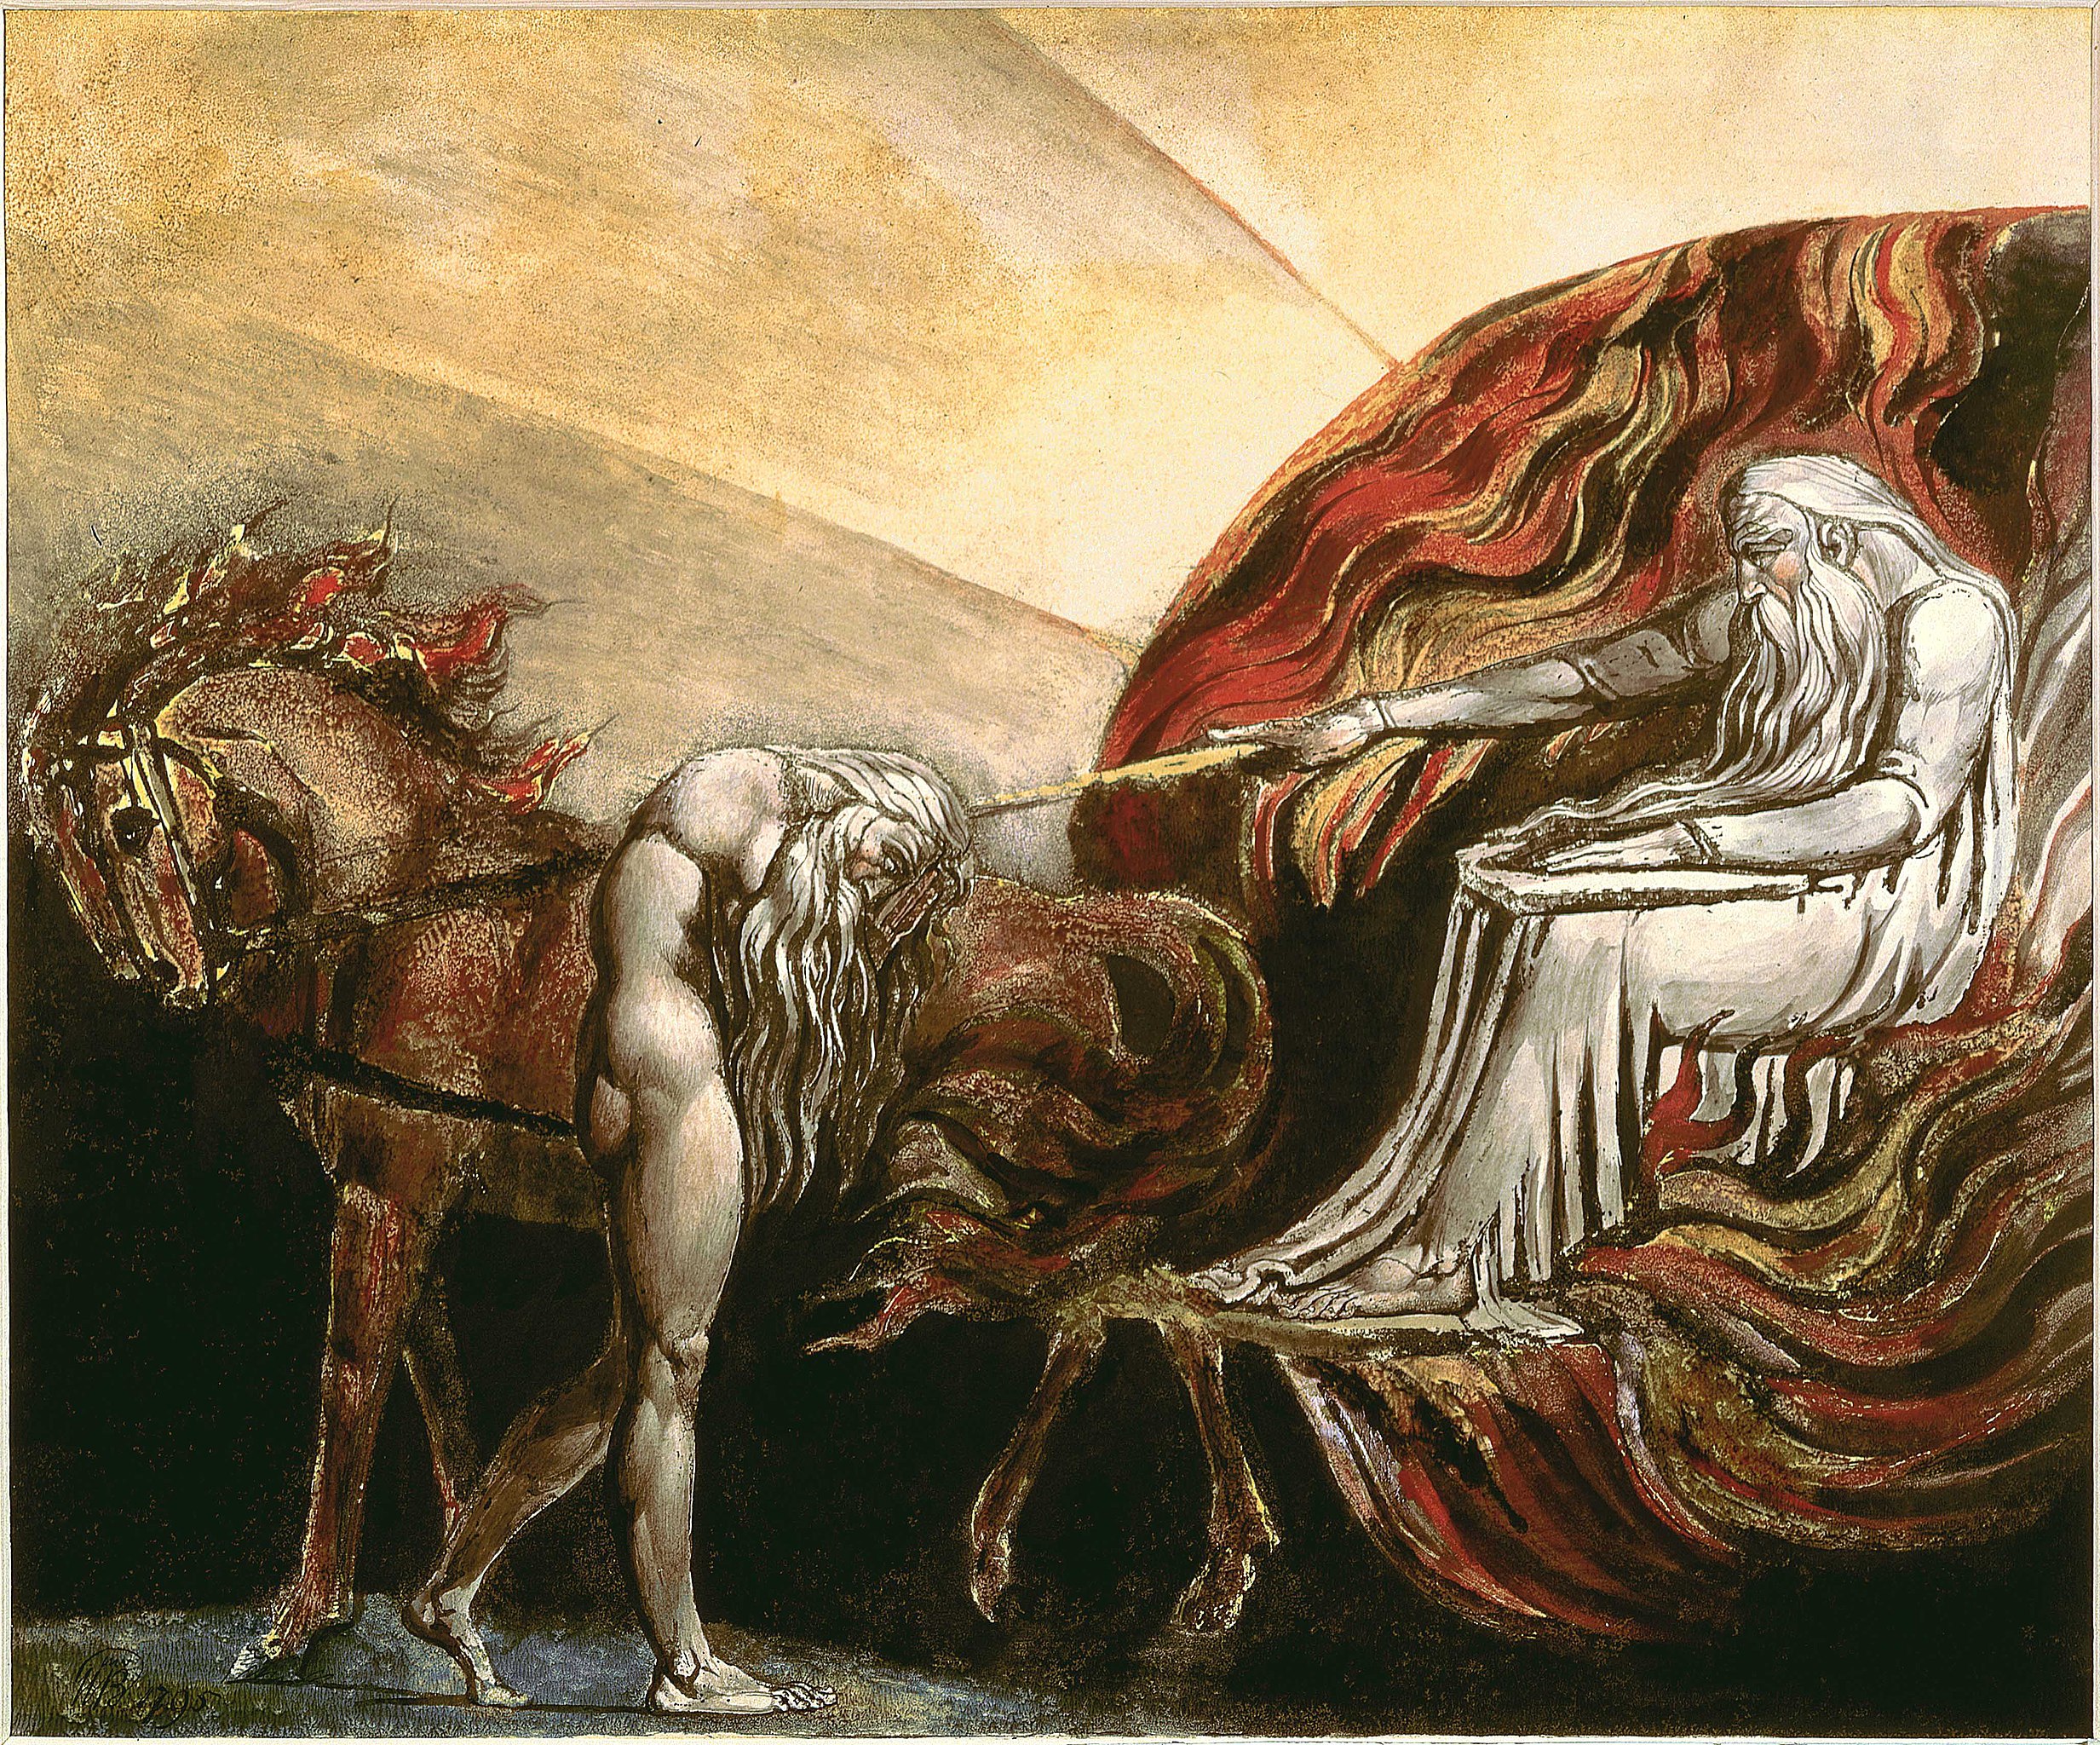 God Judging Adam by William Blake.
